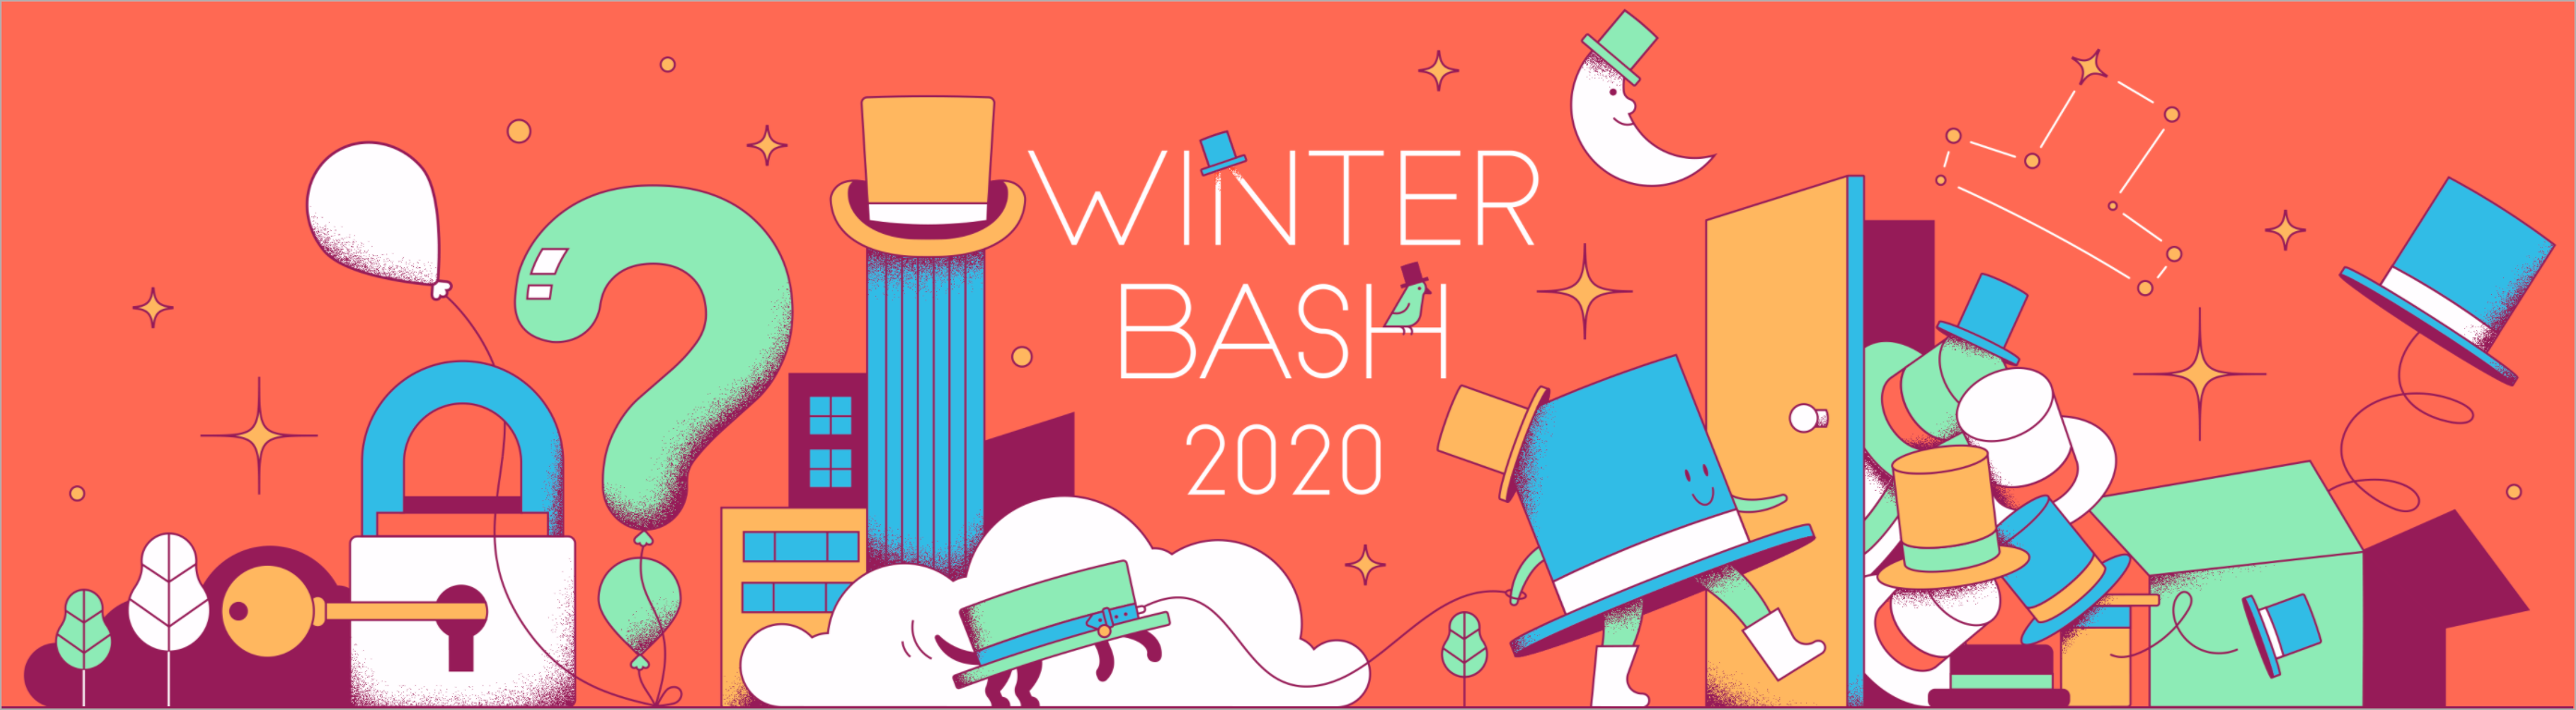 Winter Bash 2020 Image